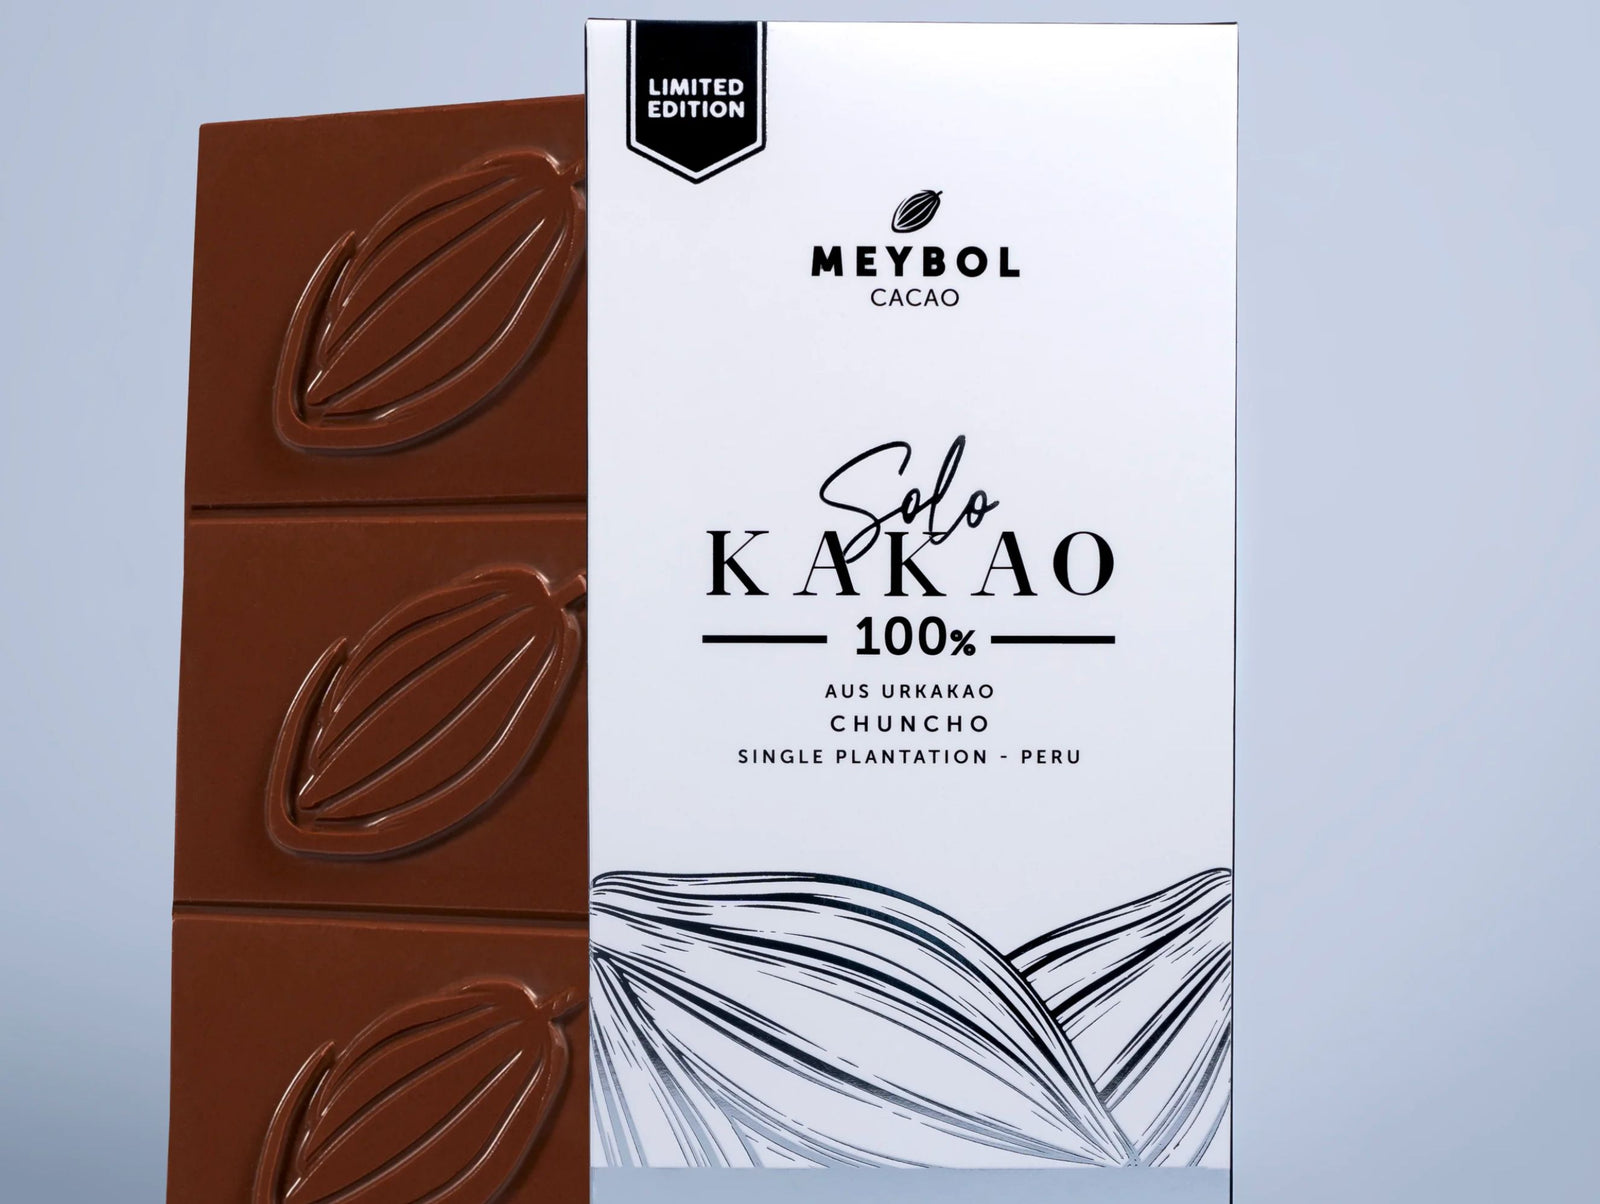 Meybol Cacao - Solo Kakao 100% | Best European Chocolate 2023